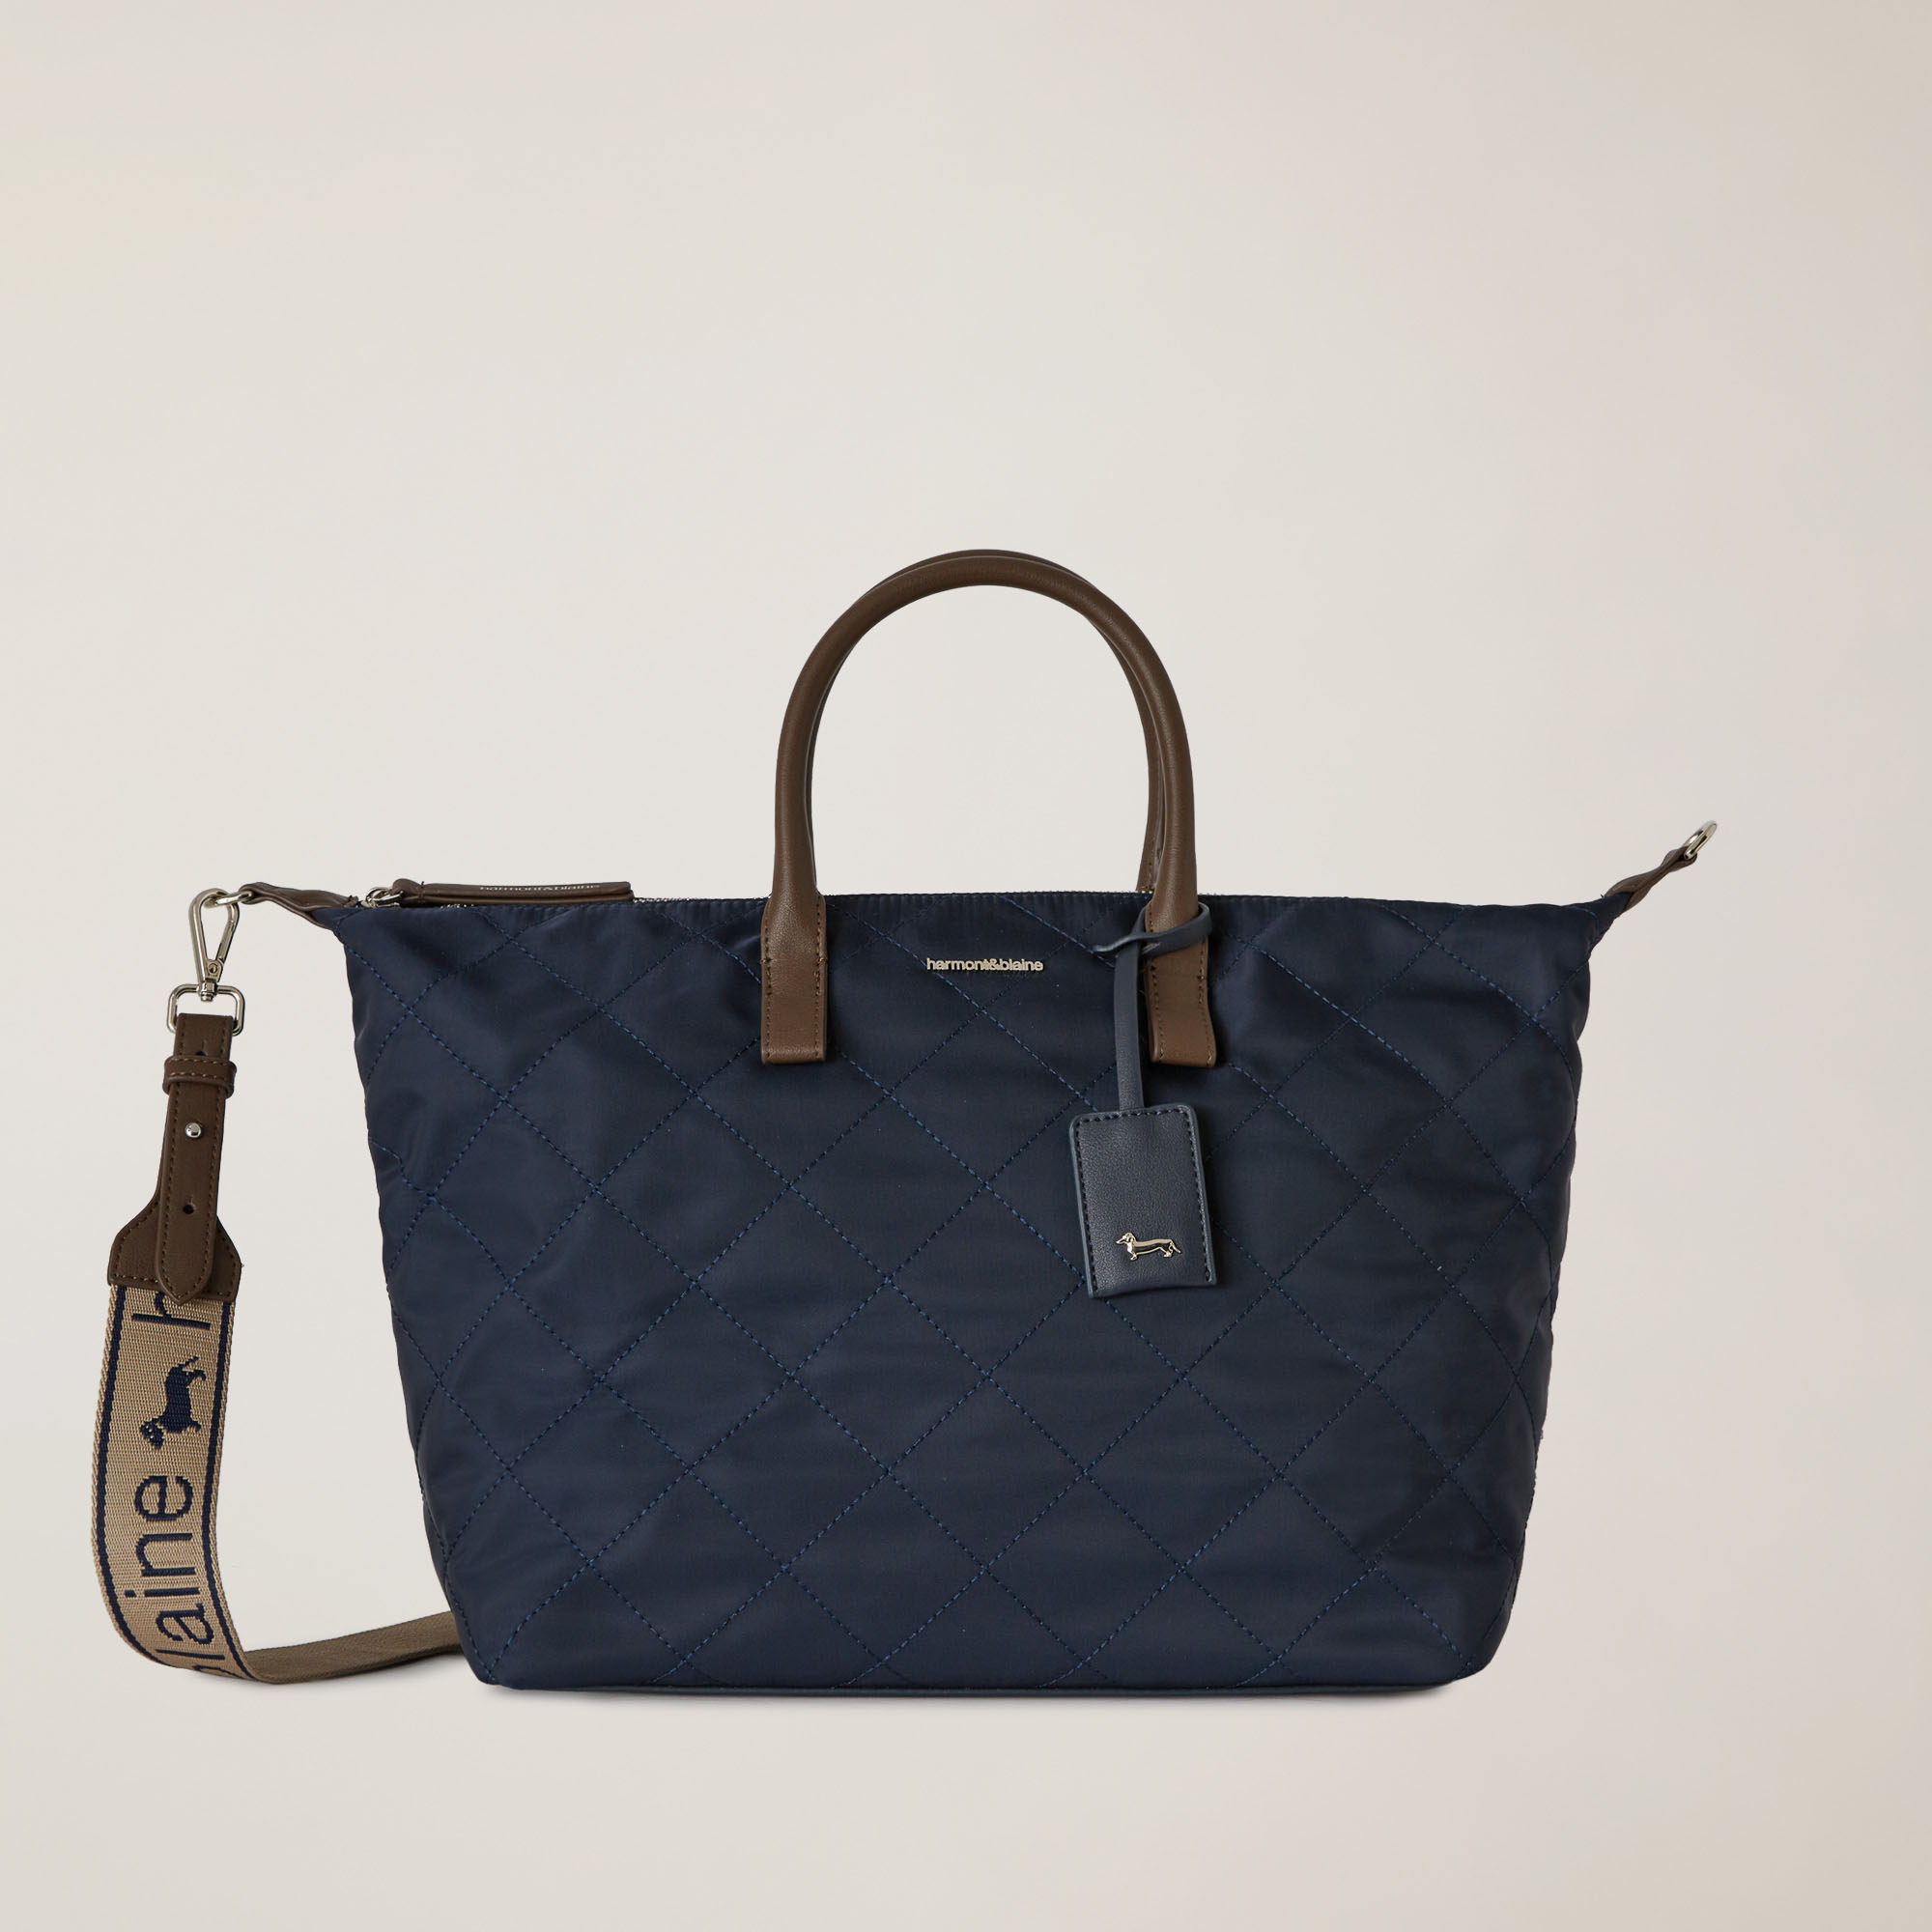 Quilted Shopper Bag With Removable Shoulder Strap, Blue, large